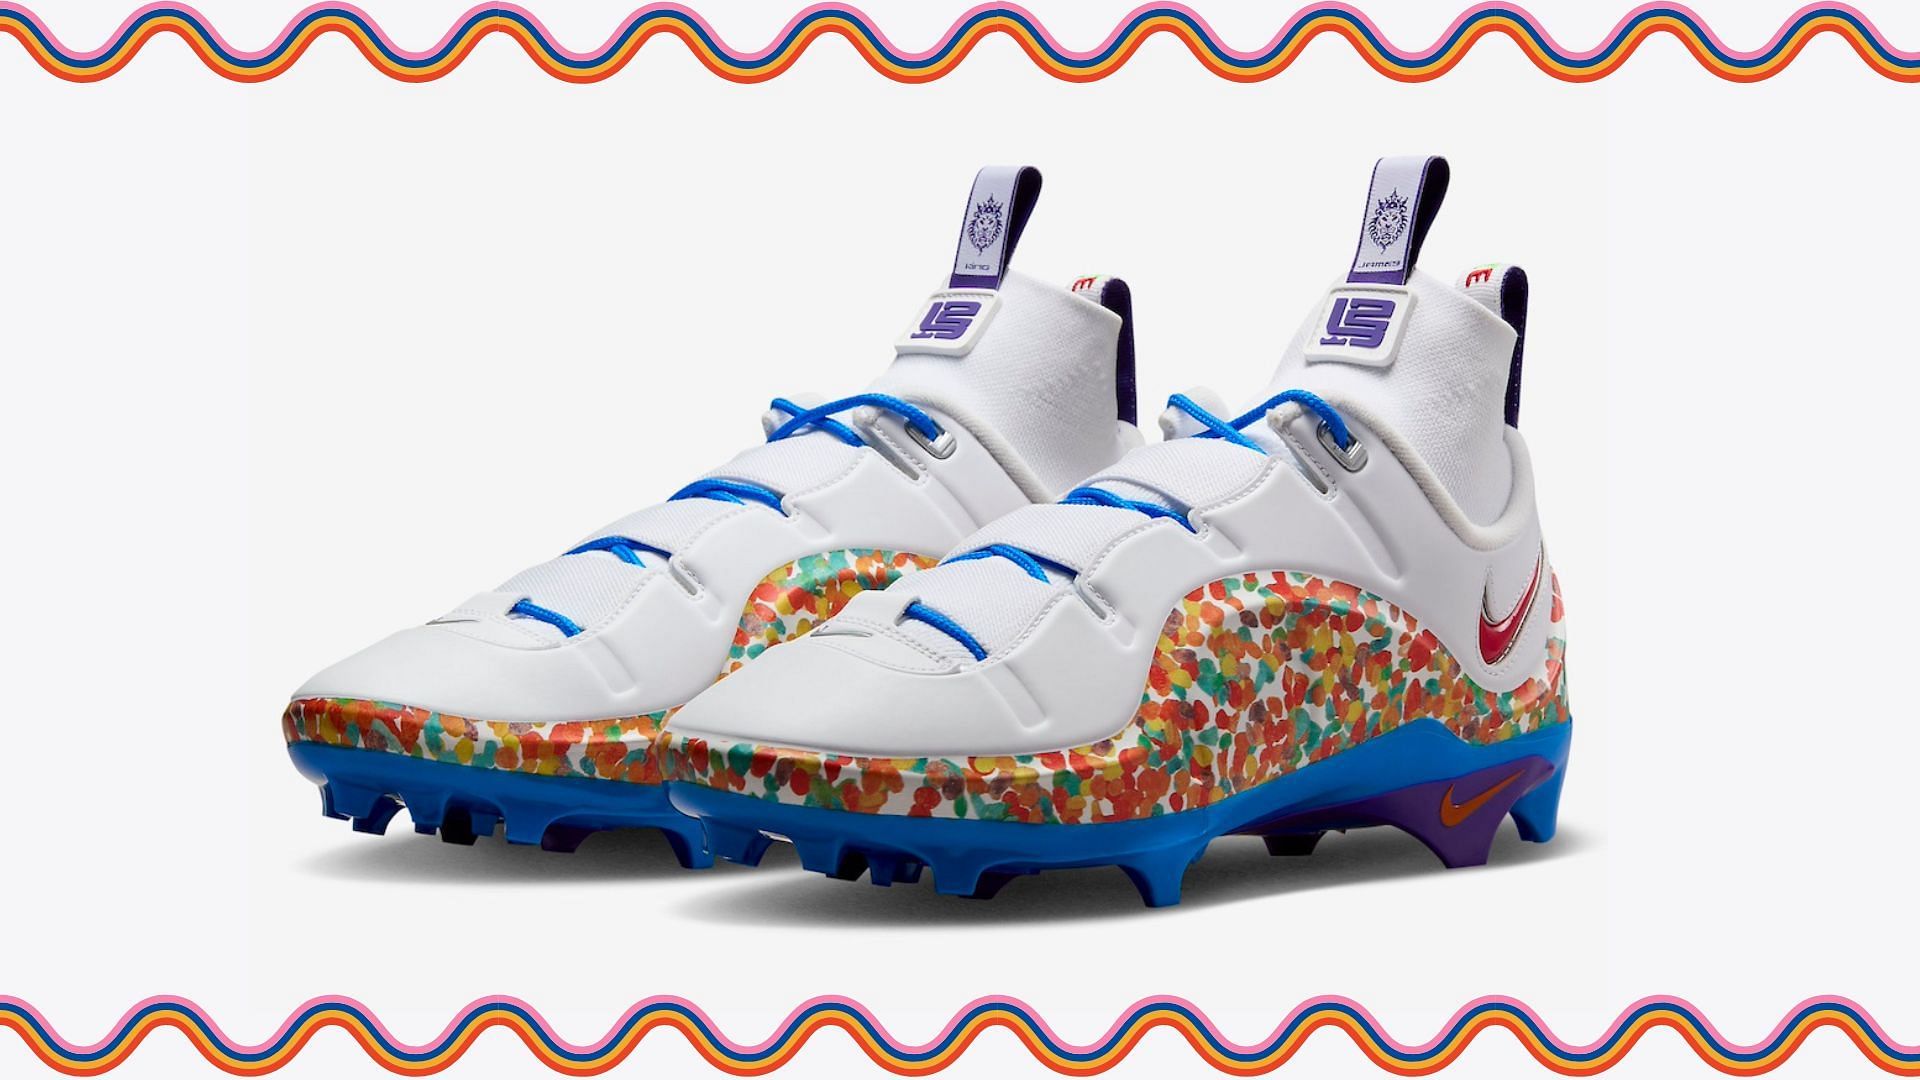 Nike LeBron 4 Menace Fruity Pebbles cleats (Image via Twitter/@_1STLook)